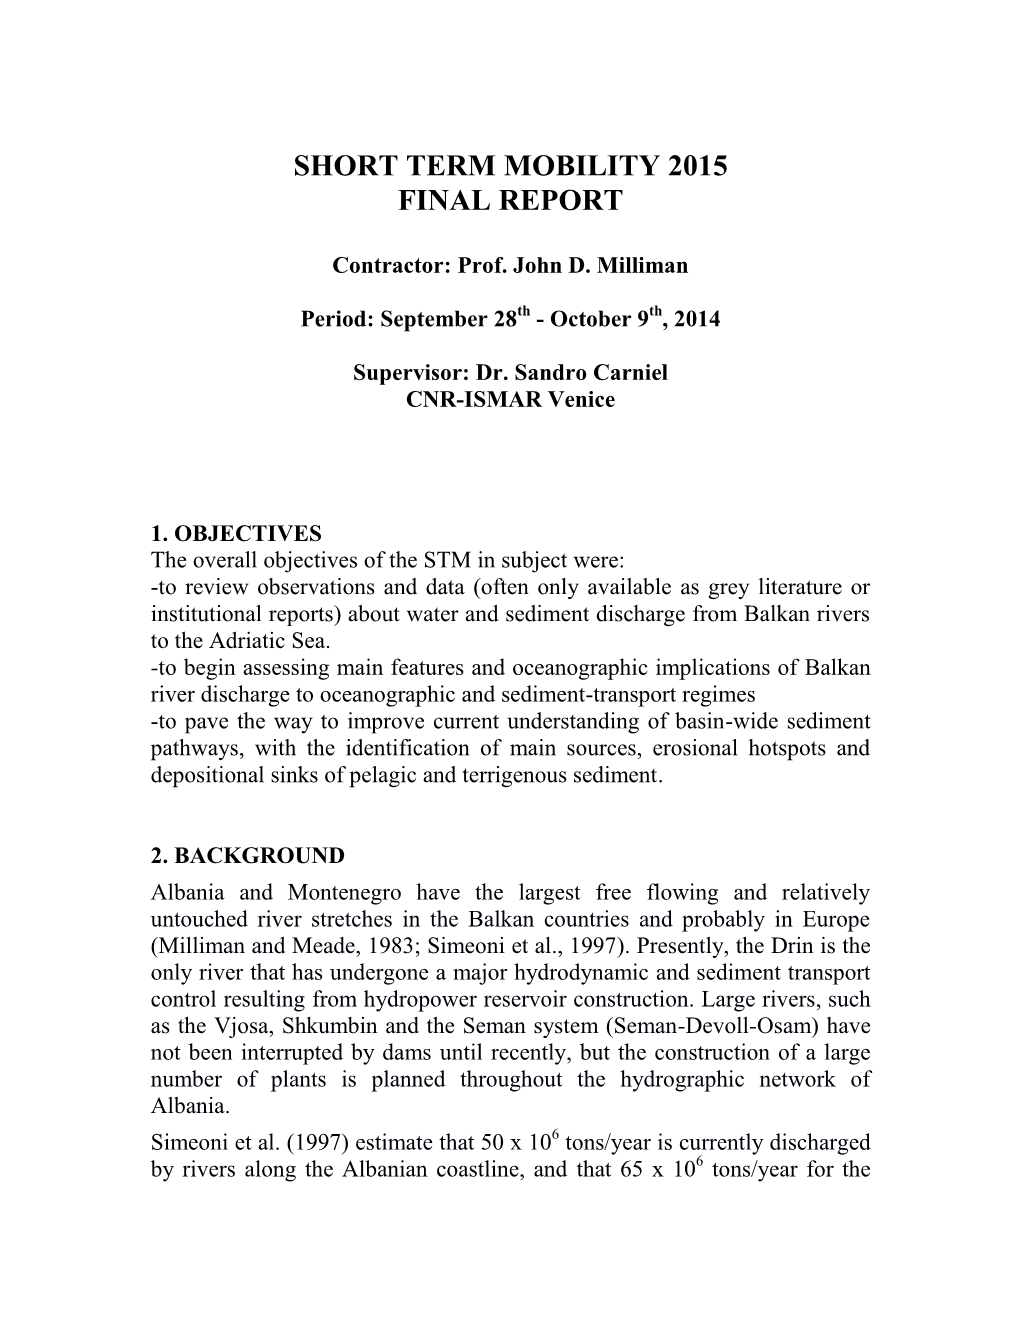 Short Term Mobility 2015 Final Report